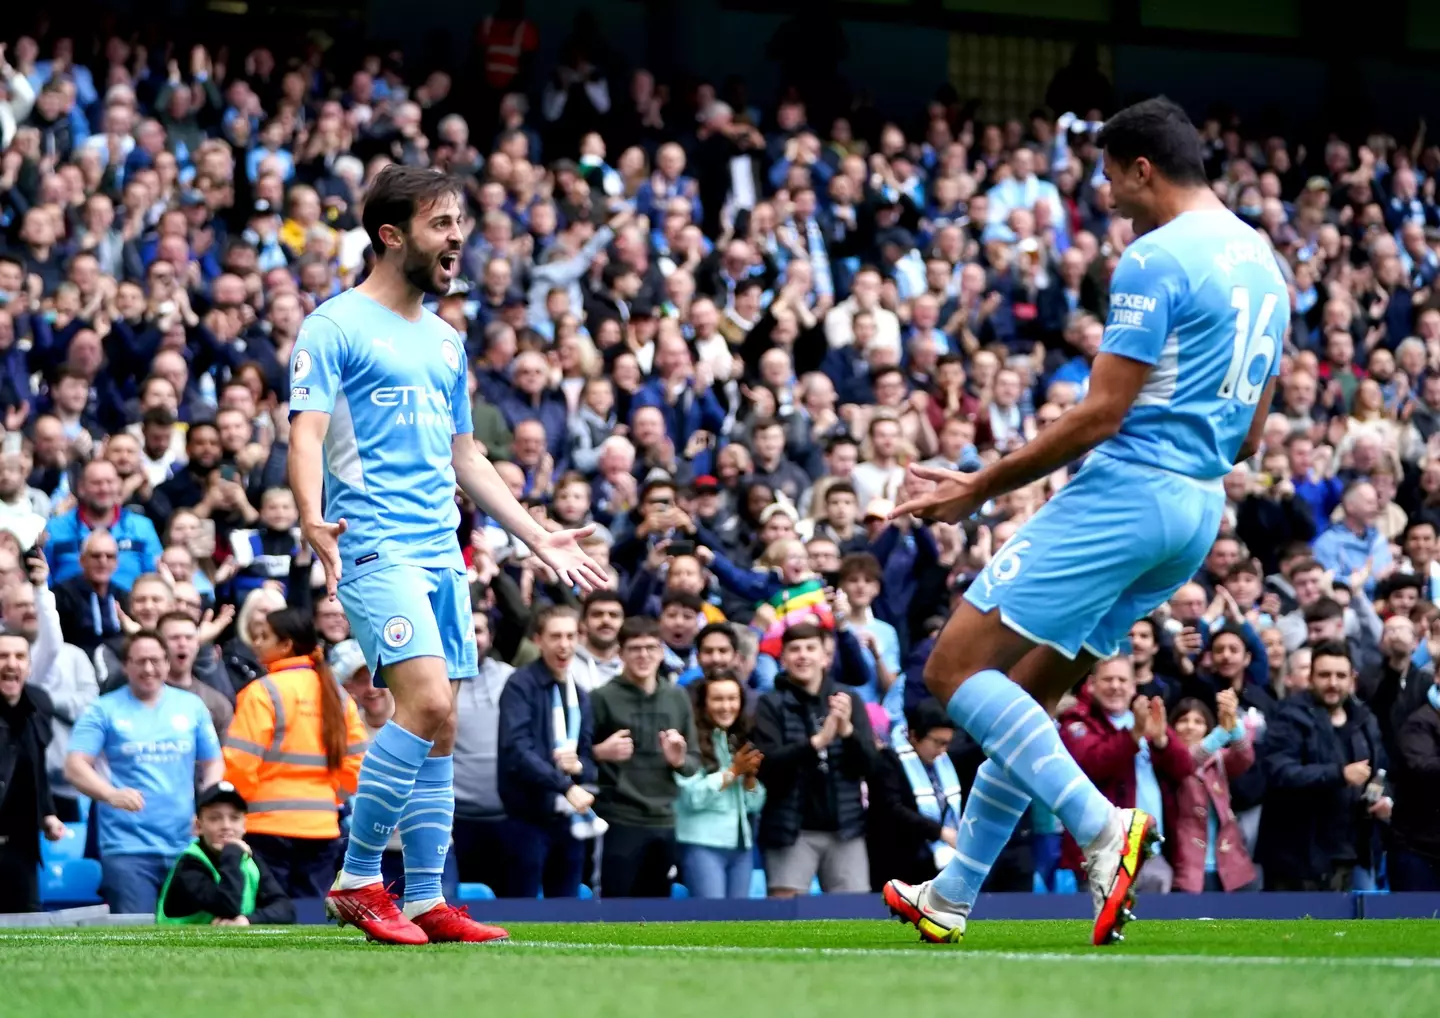 Bernardo Silva and Rodri celebrate after Manchester City take the lead against Burnley (Image: PA / Alamy)